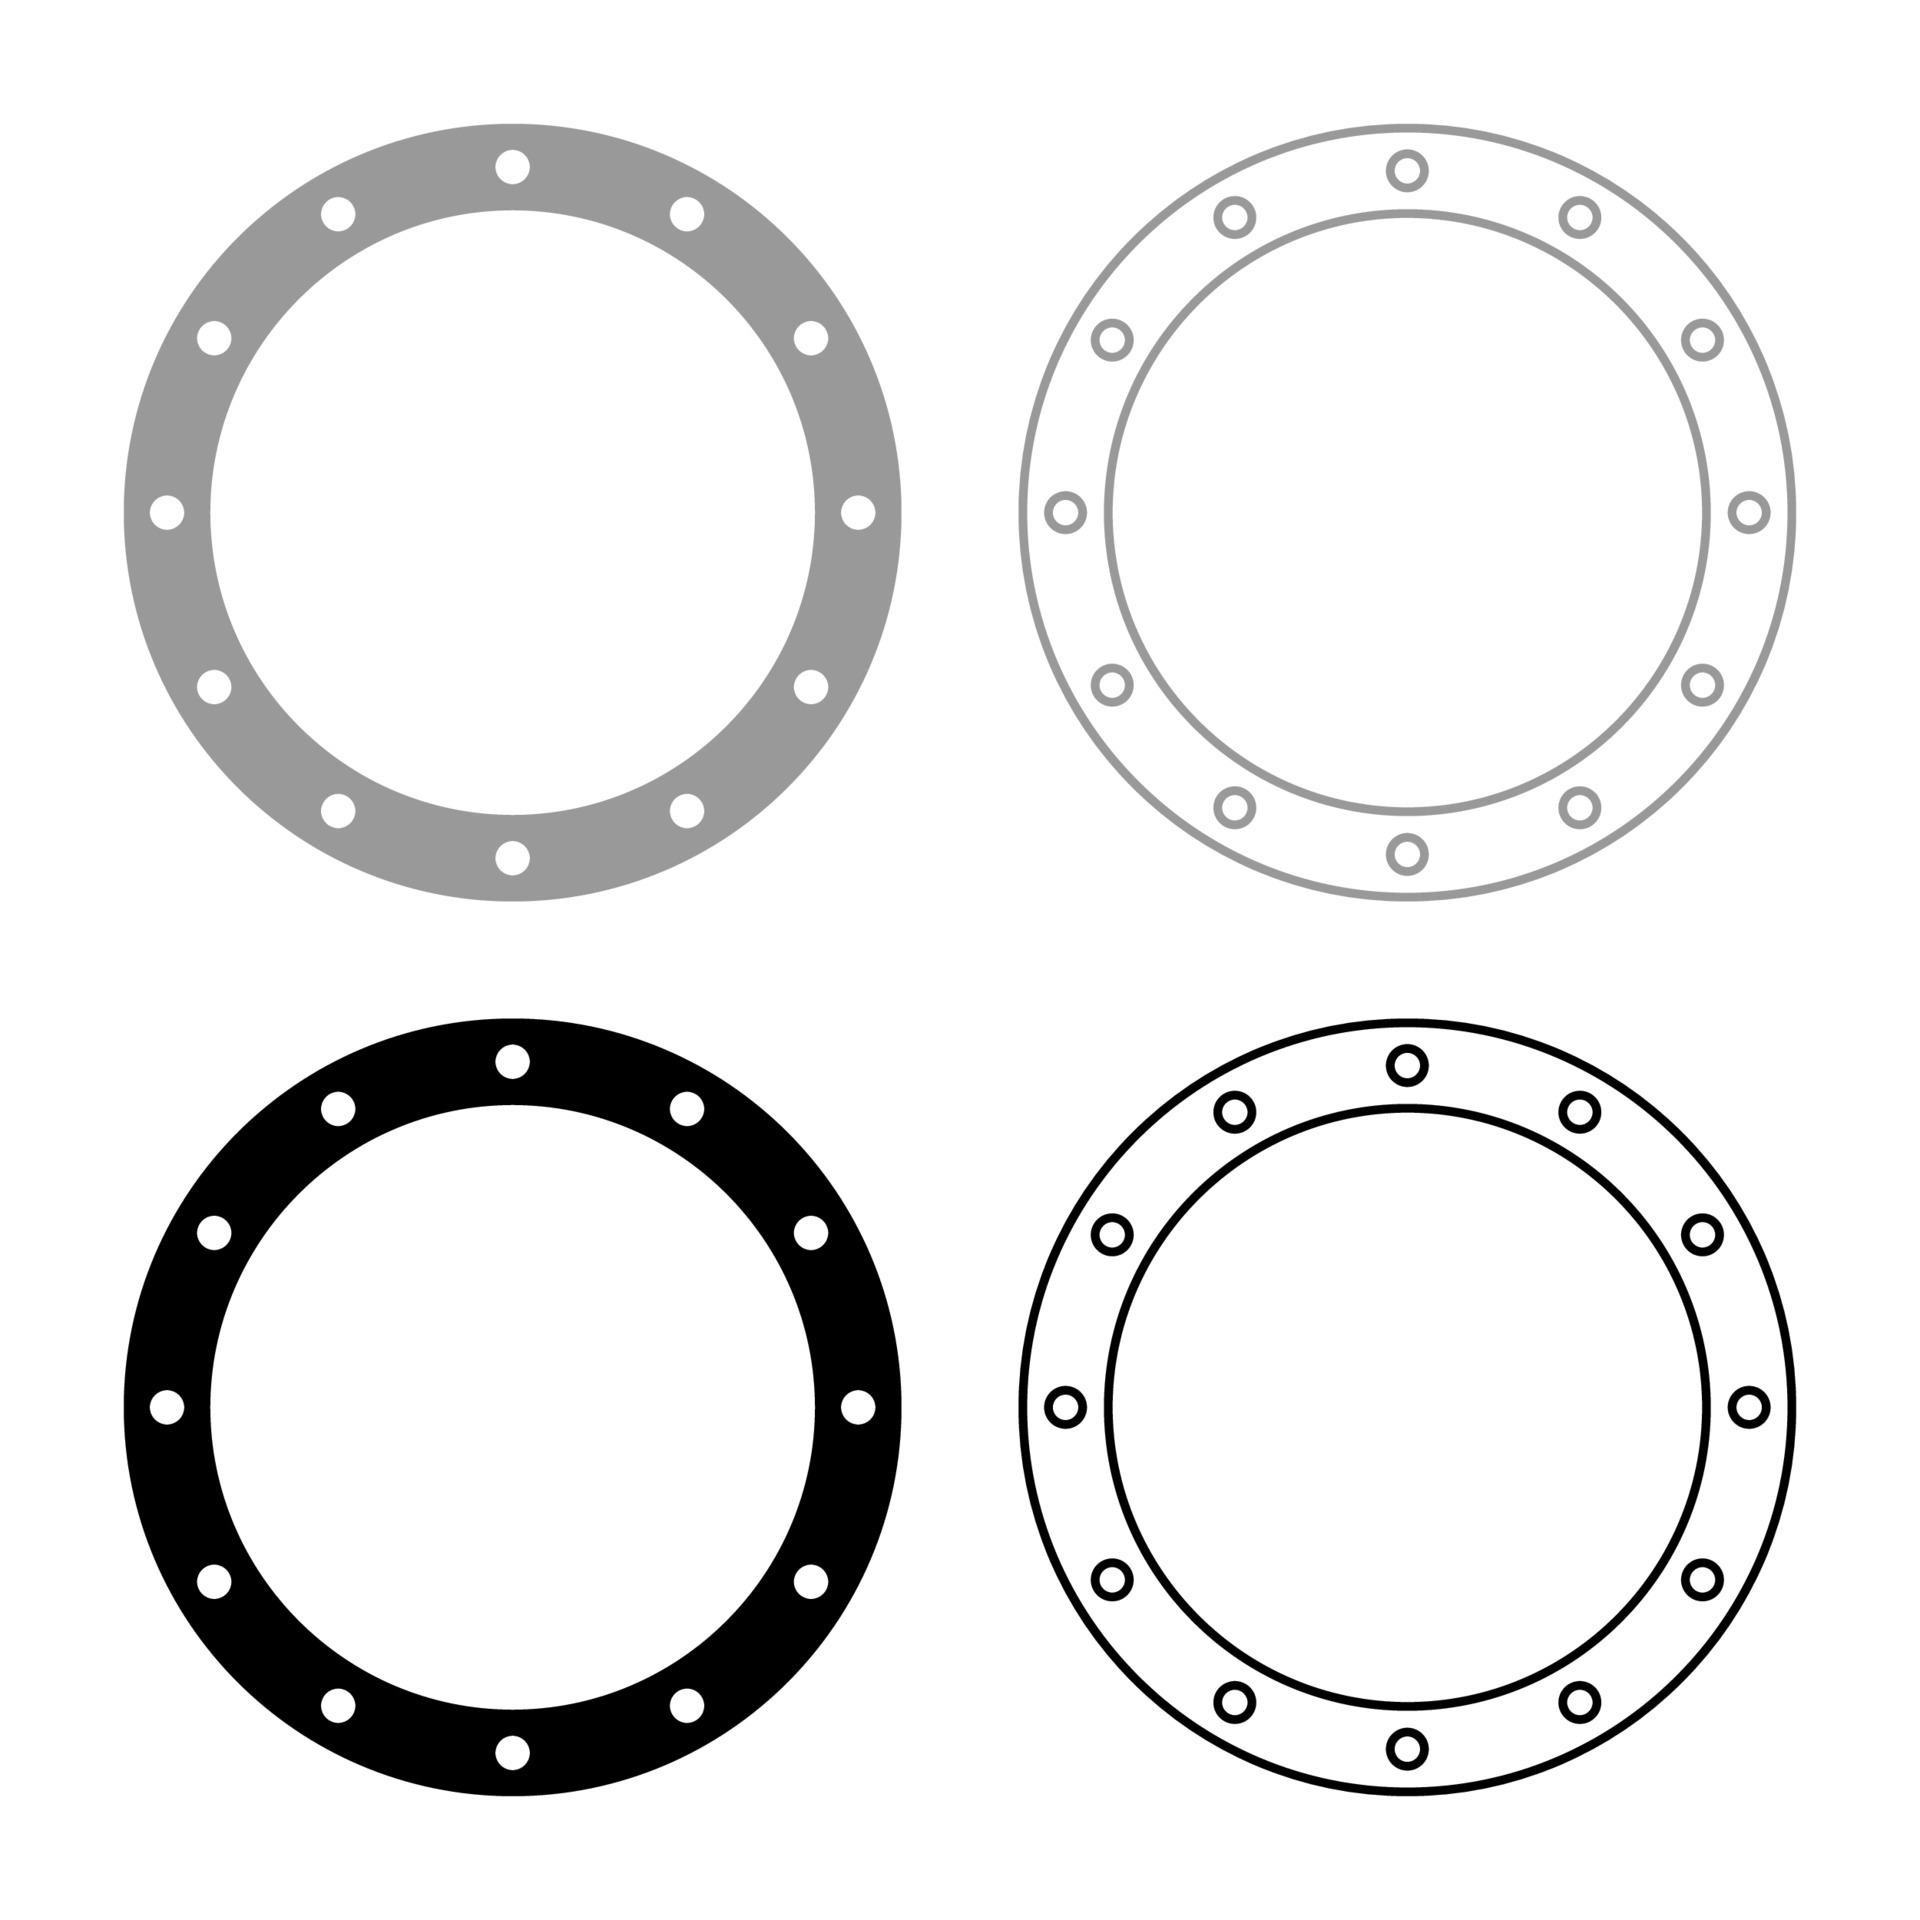 Gummidichtung mit Löchern Tüllendichtung Leckage O-Ring Reten Set Symbol  grau schwarz Farbe Vektor Illustration Flat Style Image 5913681 Vektor  Kunst bei Vecteezy